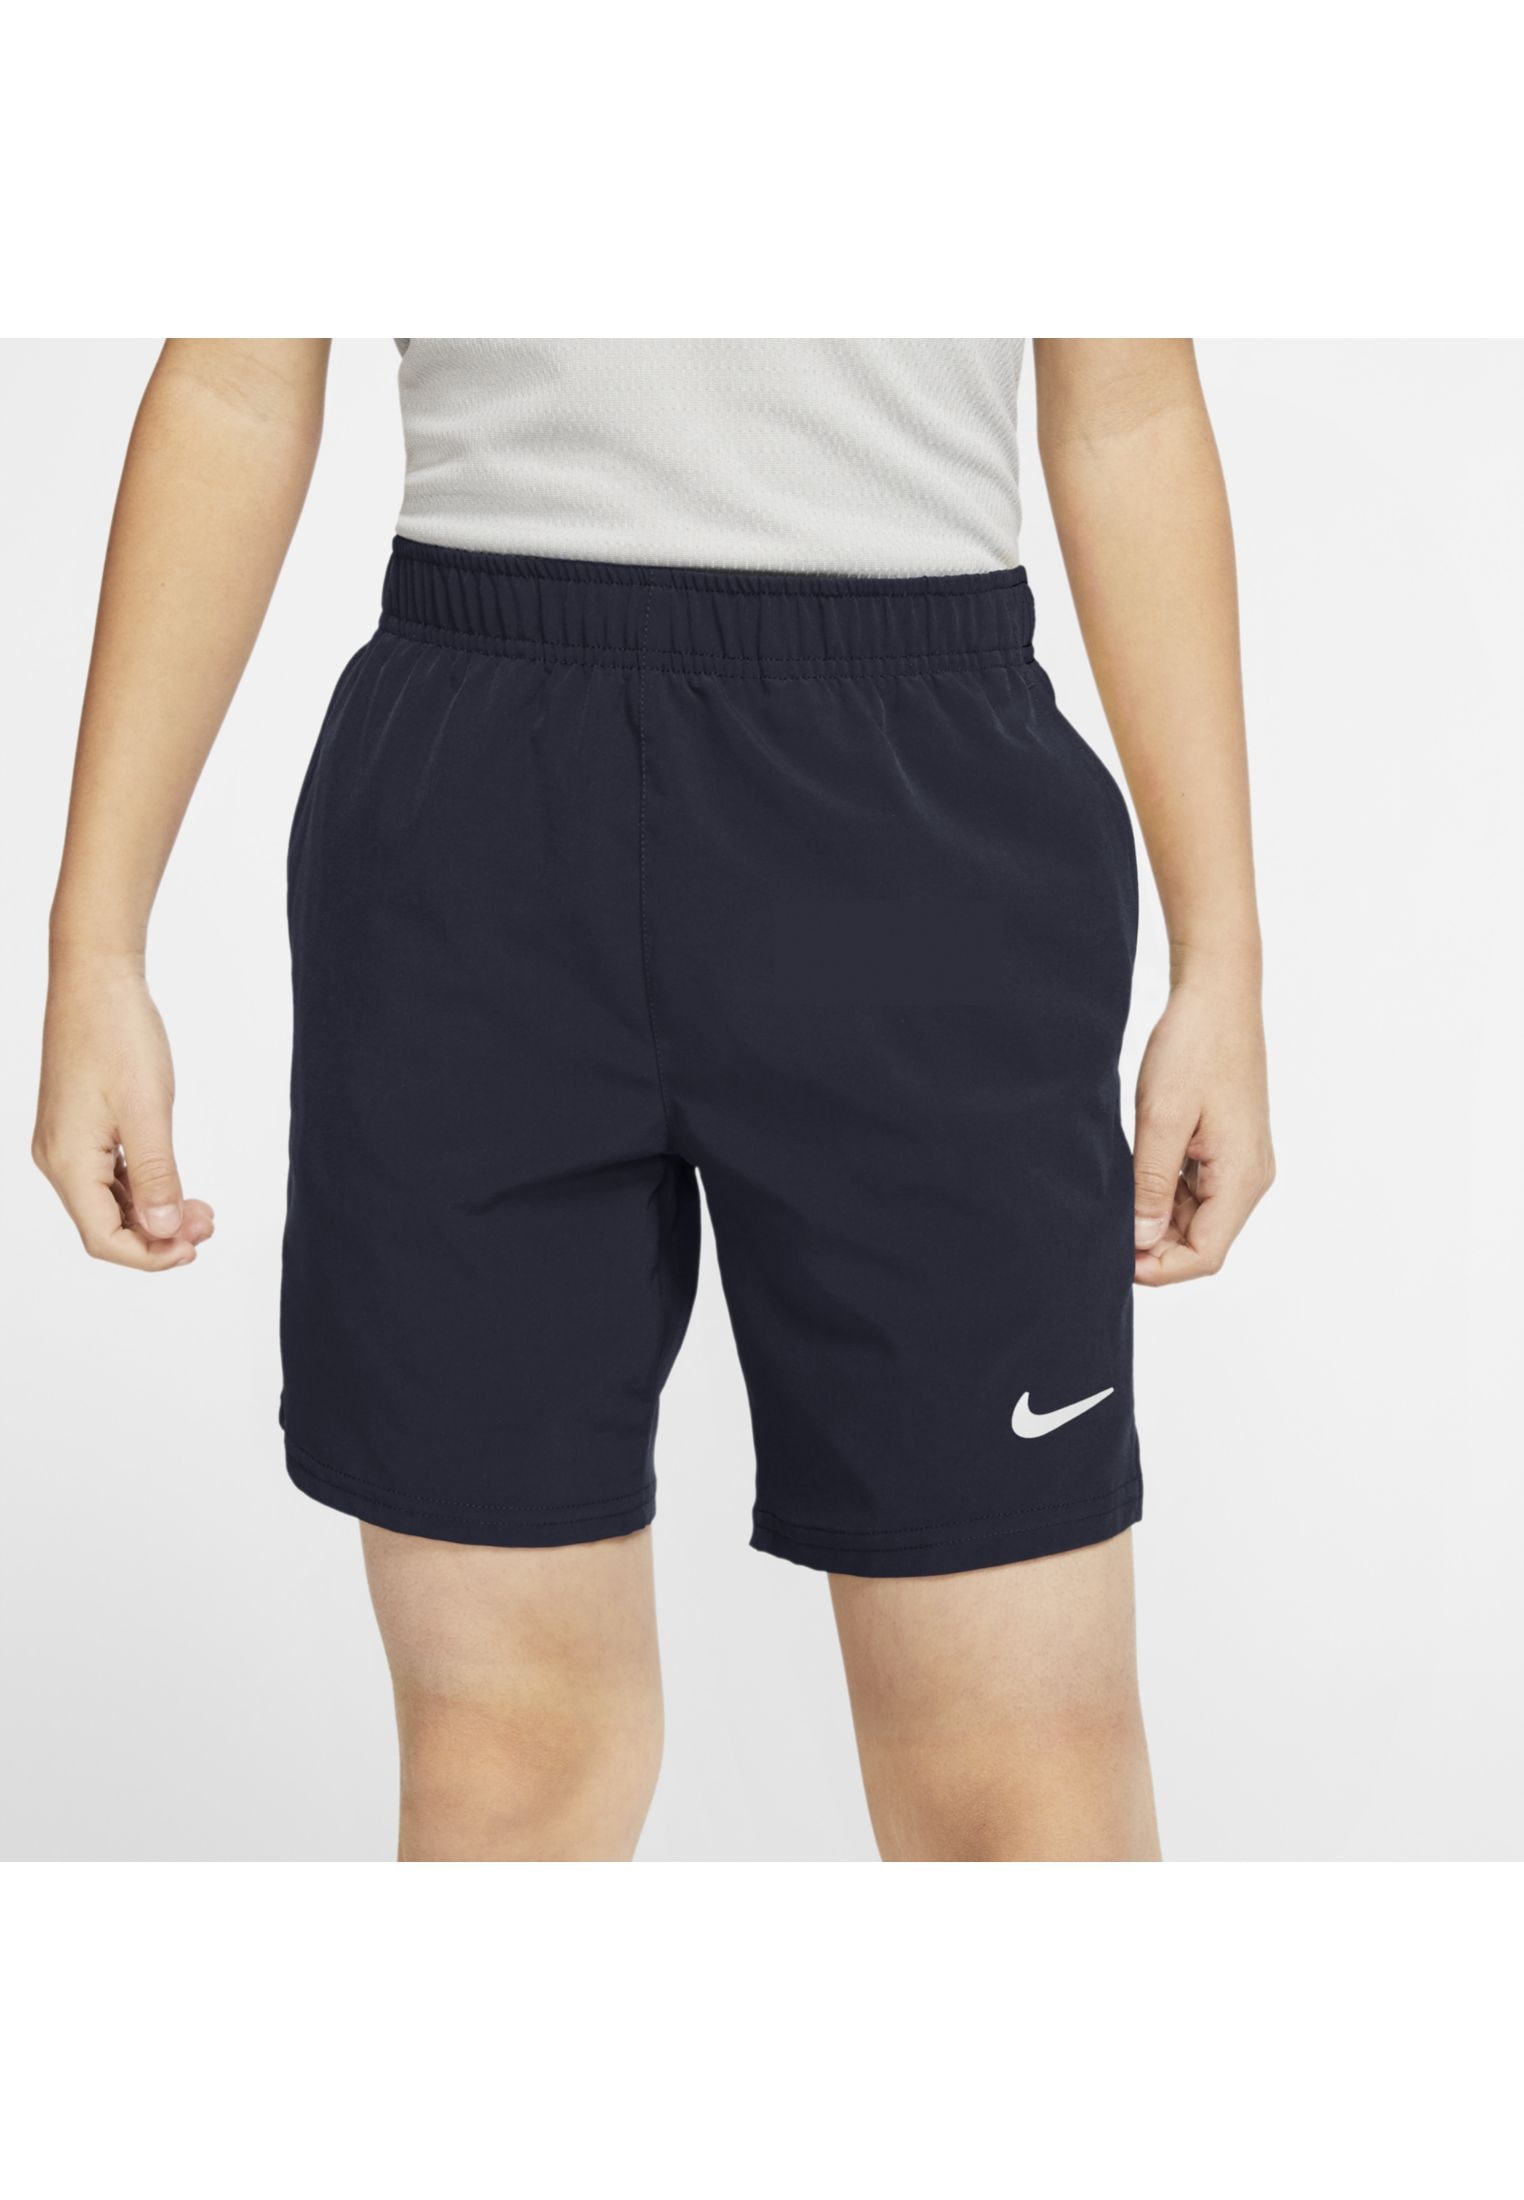 Nike Court Flex Ace Short - Obsidian/Obsidian/White - Mens Clothing